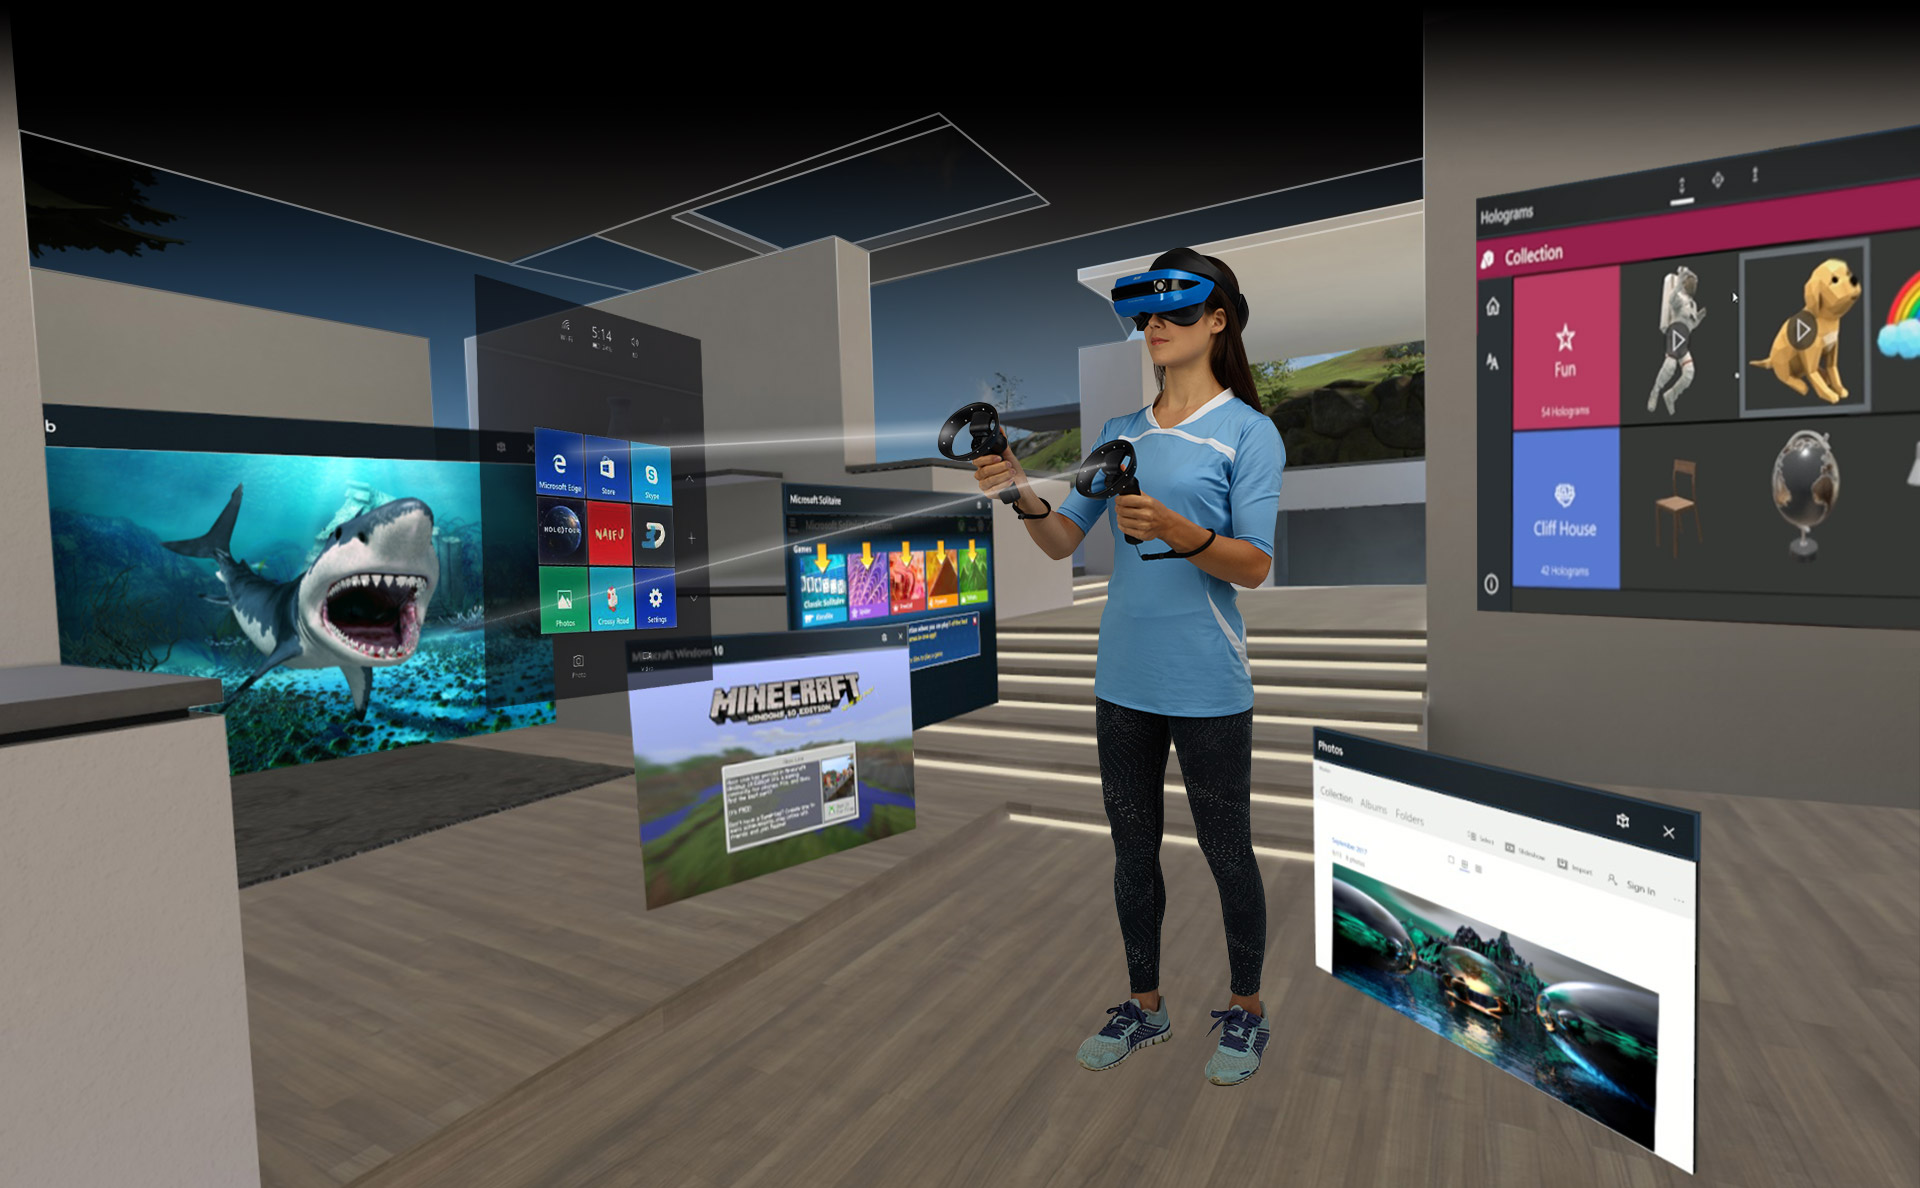 Windows mr. Acer VR Windows Mixed reality. VR шлем Windows Mixed reality. VR системы Acer. Виртуальный дизайн.